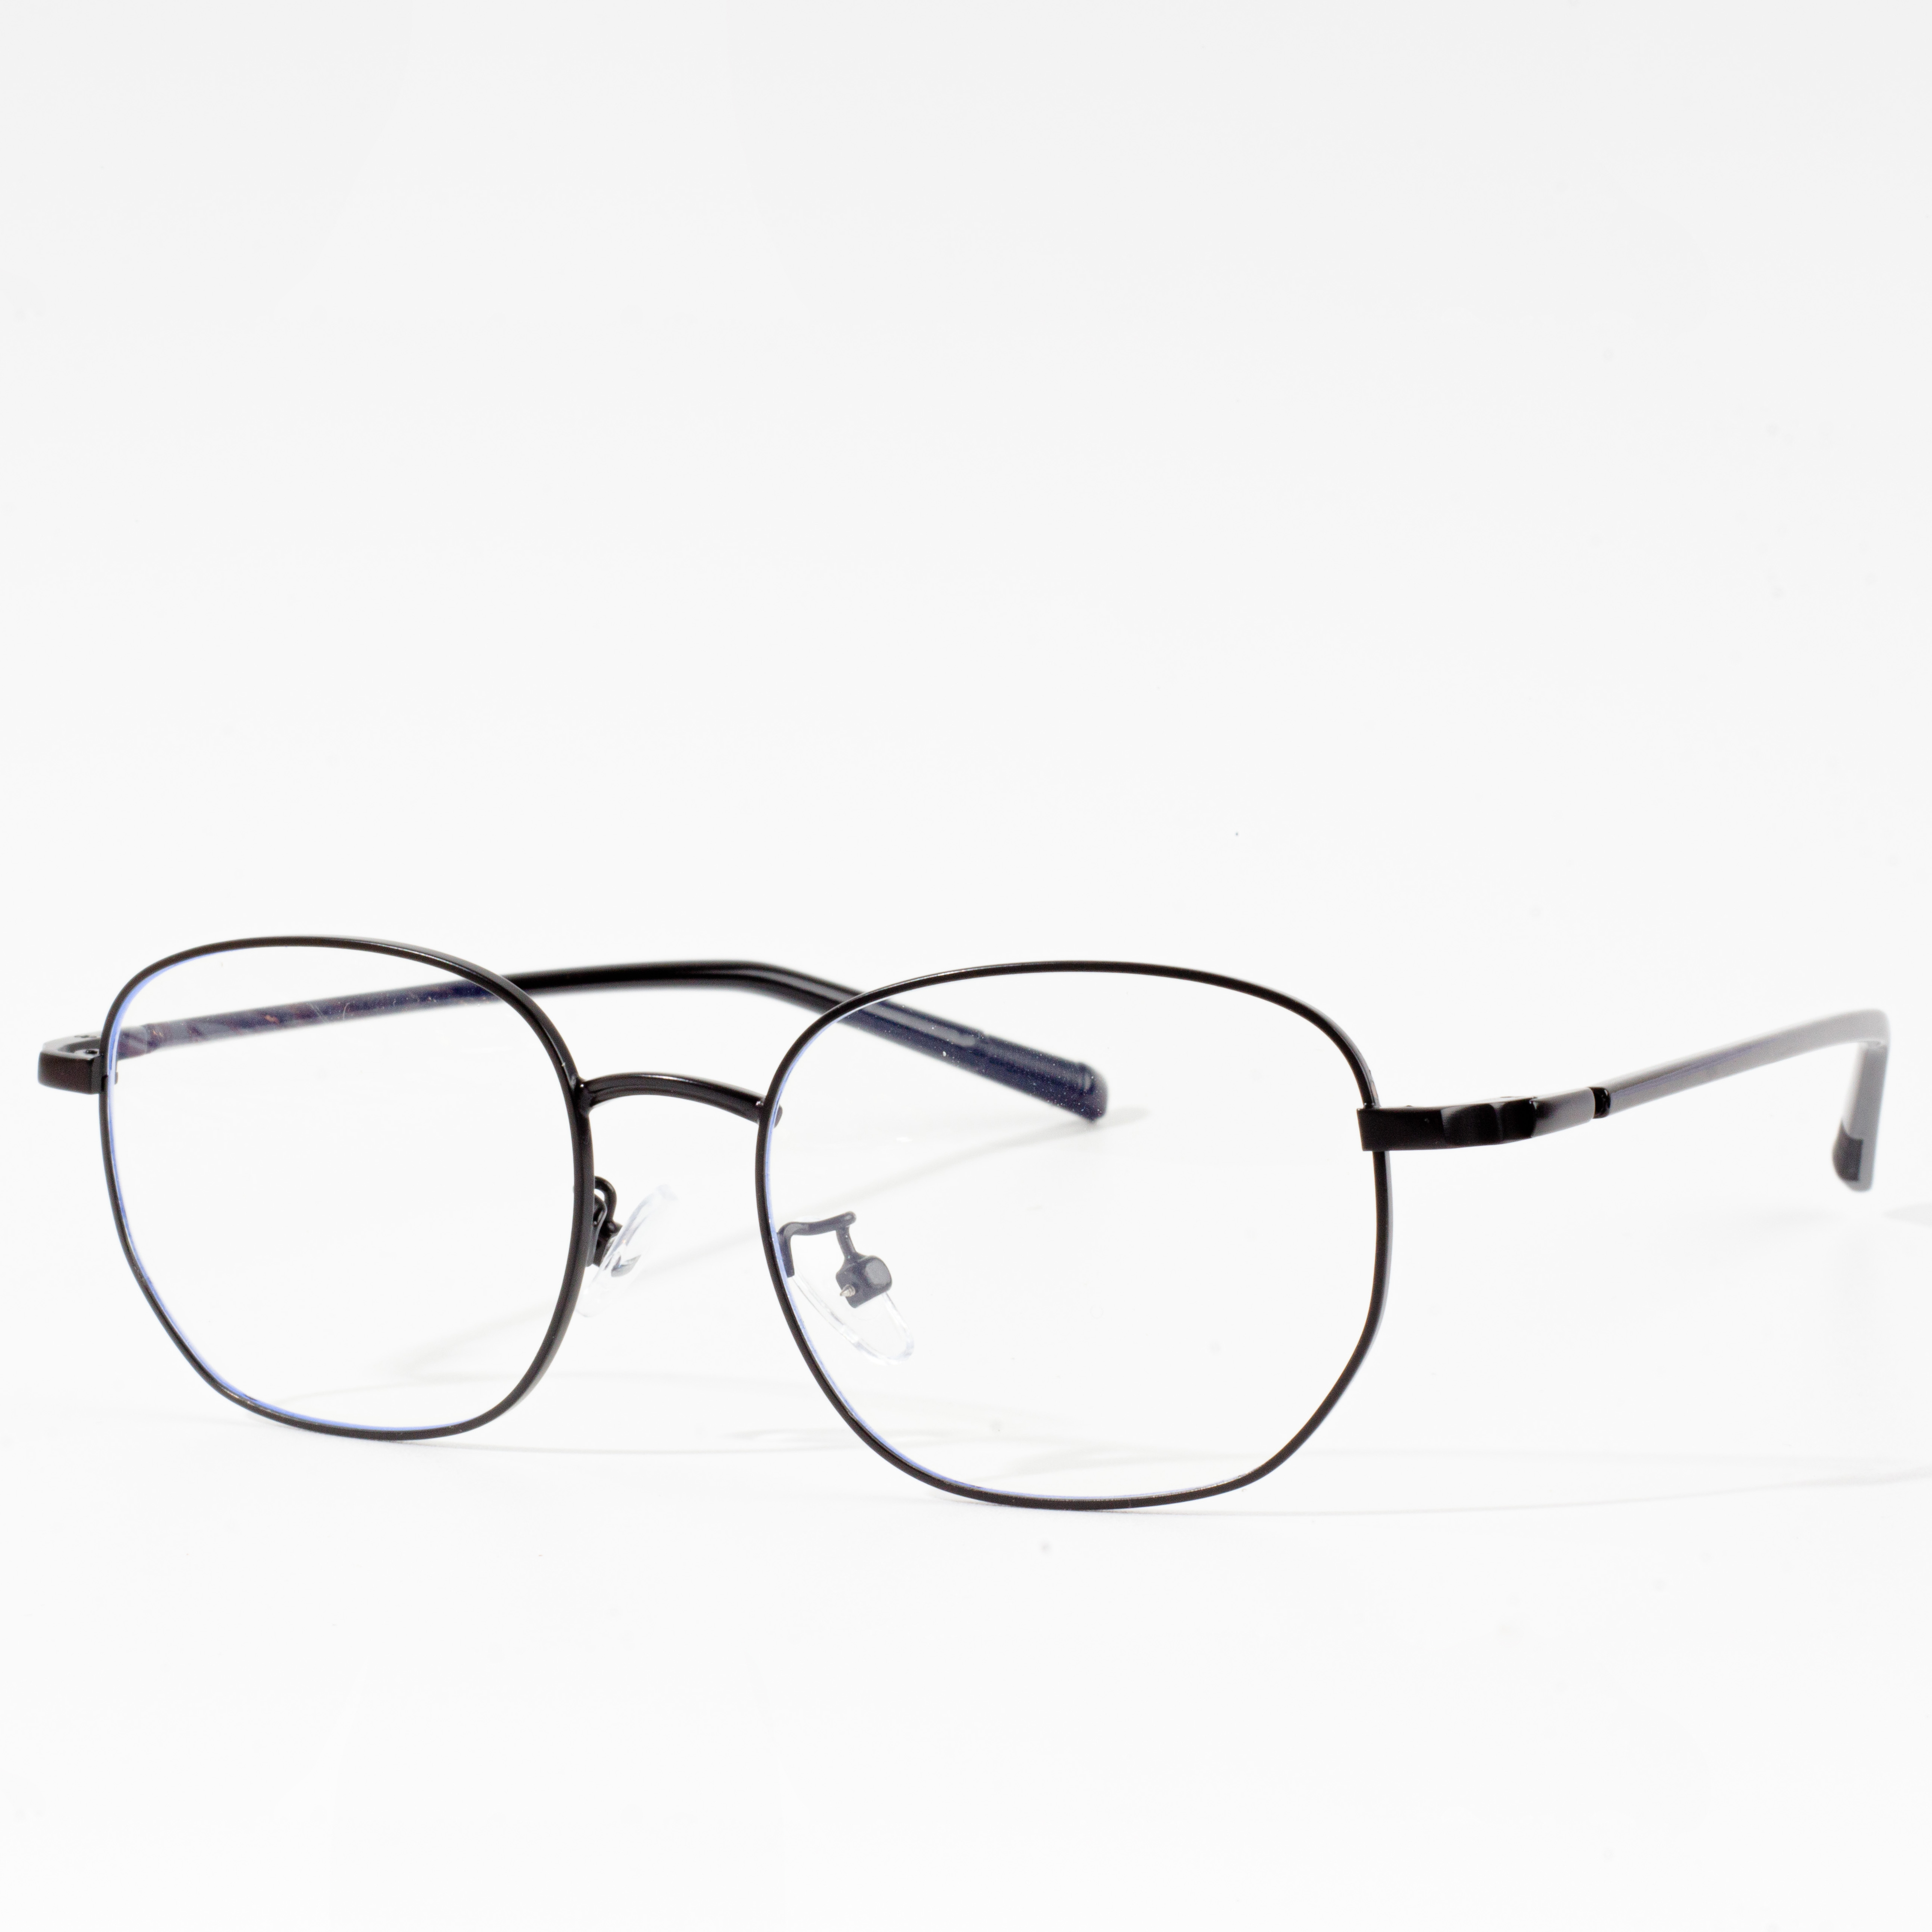 types of eyeglass frames